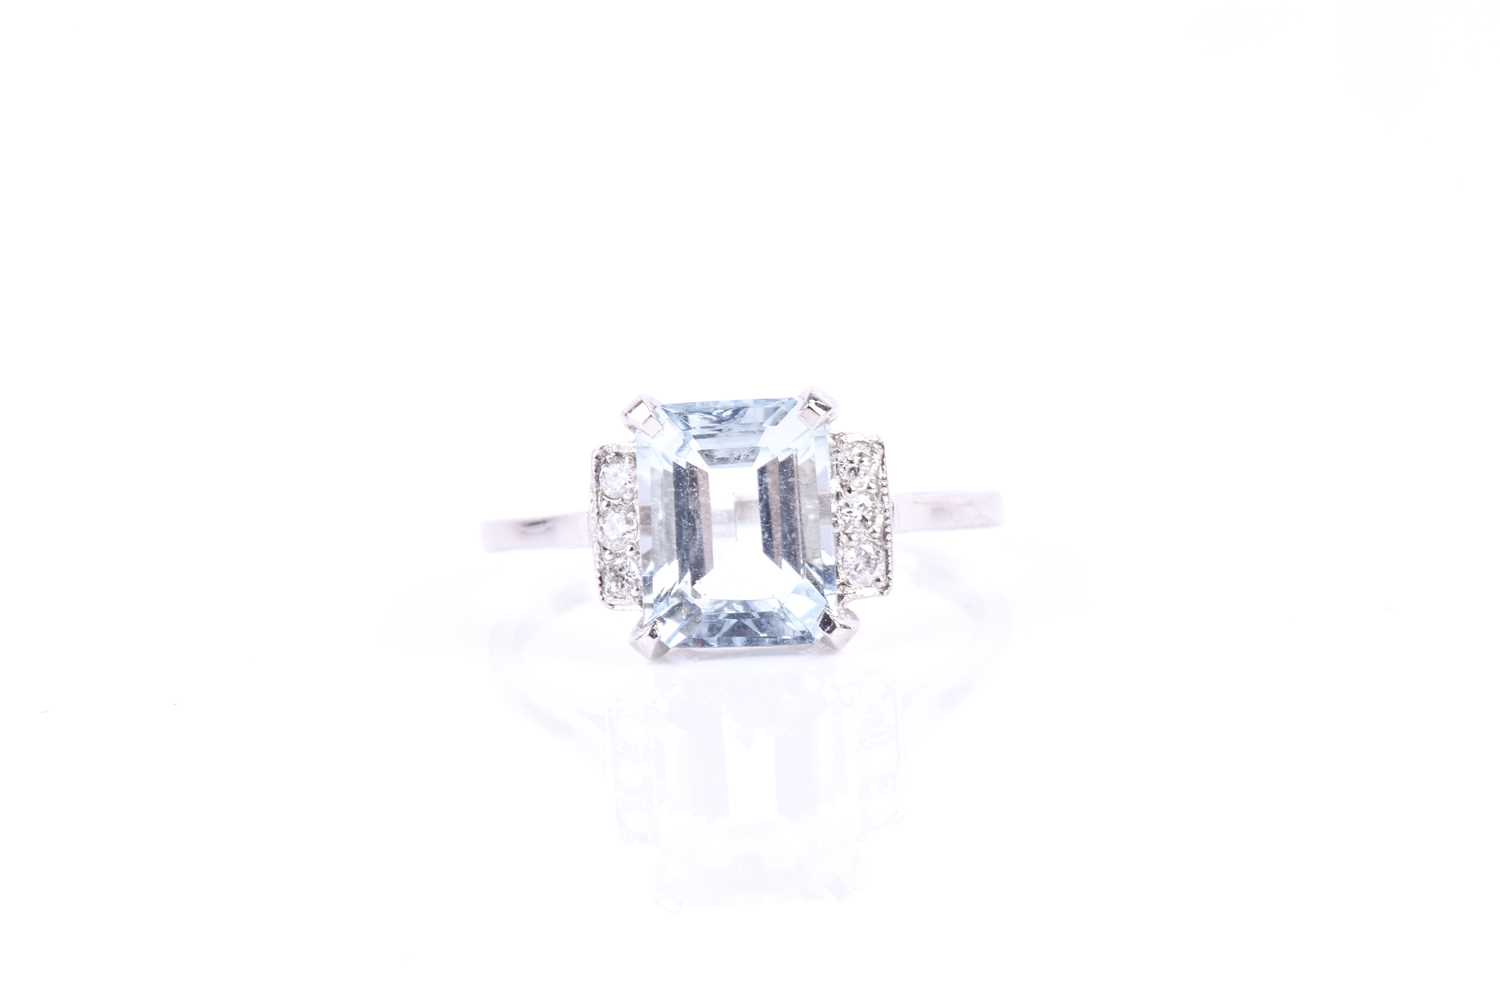 A platinum, diamond, and aquamarine ring, set with an emerald-cut aquamarine of approximately 2.0